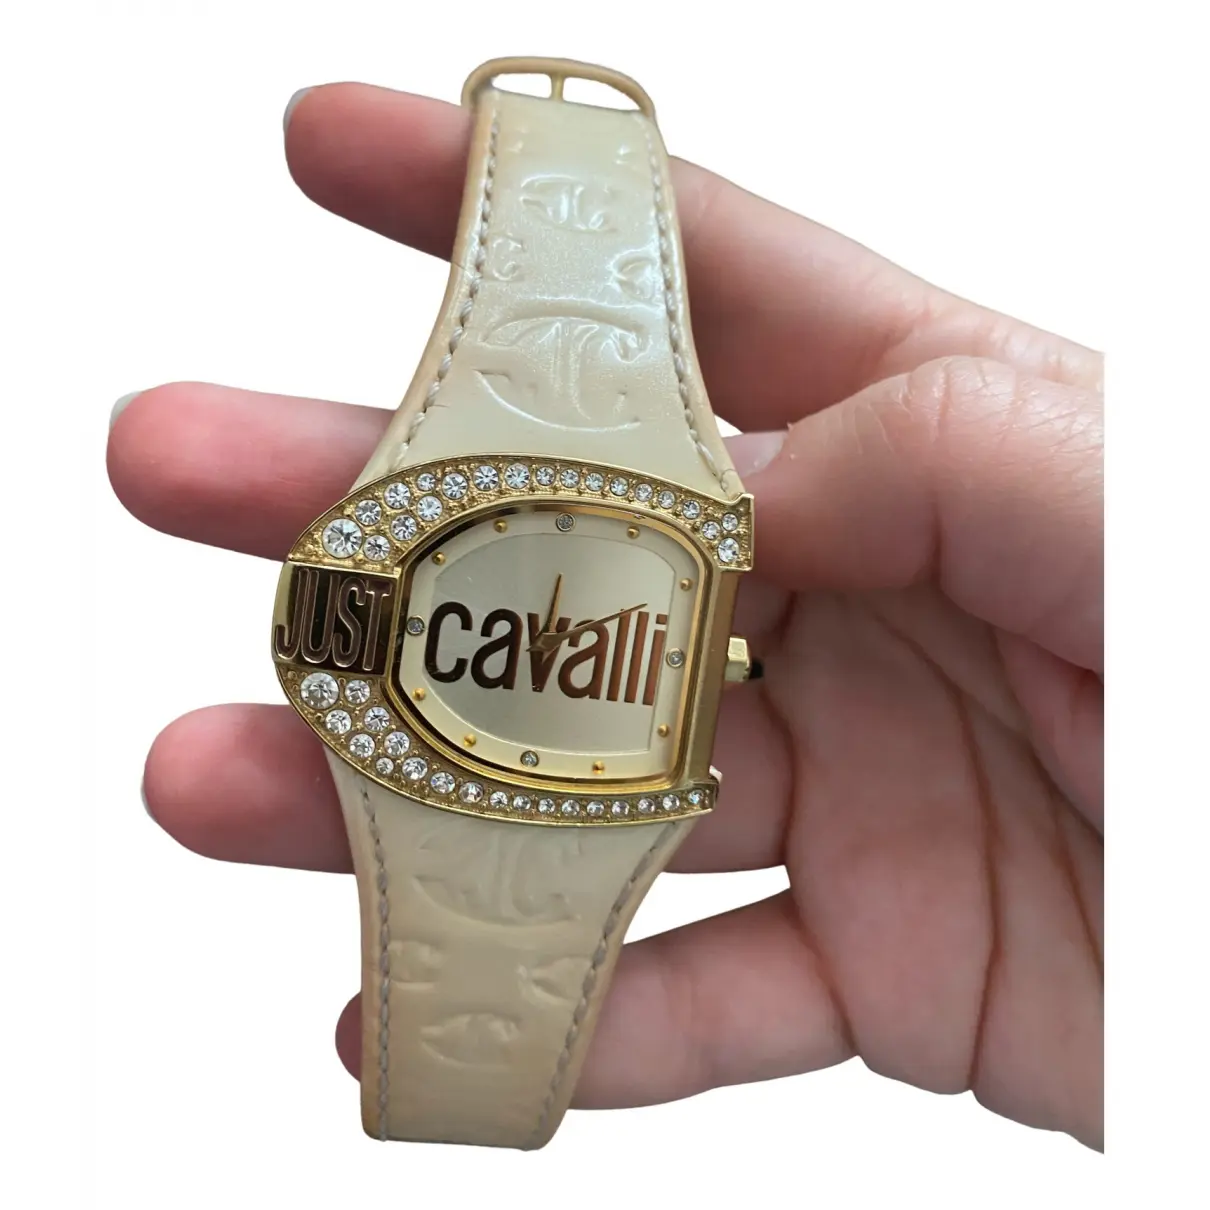 Buy Just Cavalli Watch online - Vintage